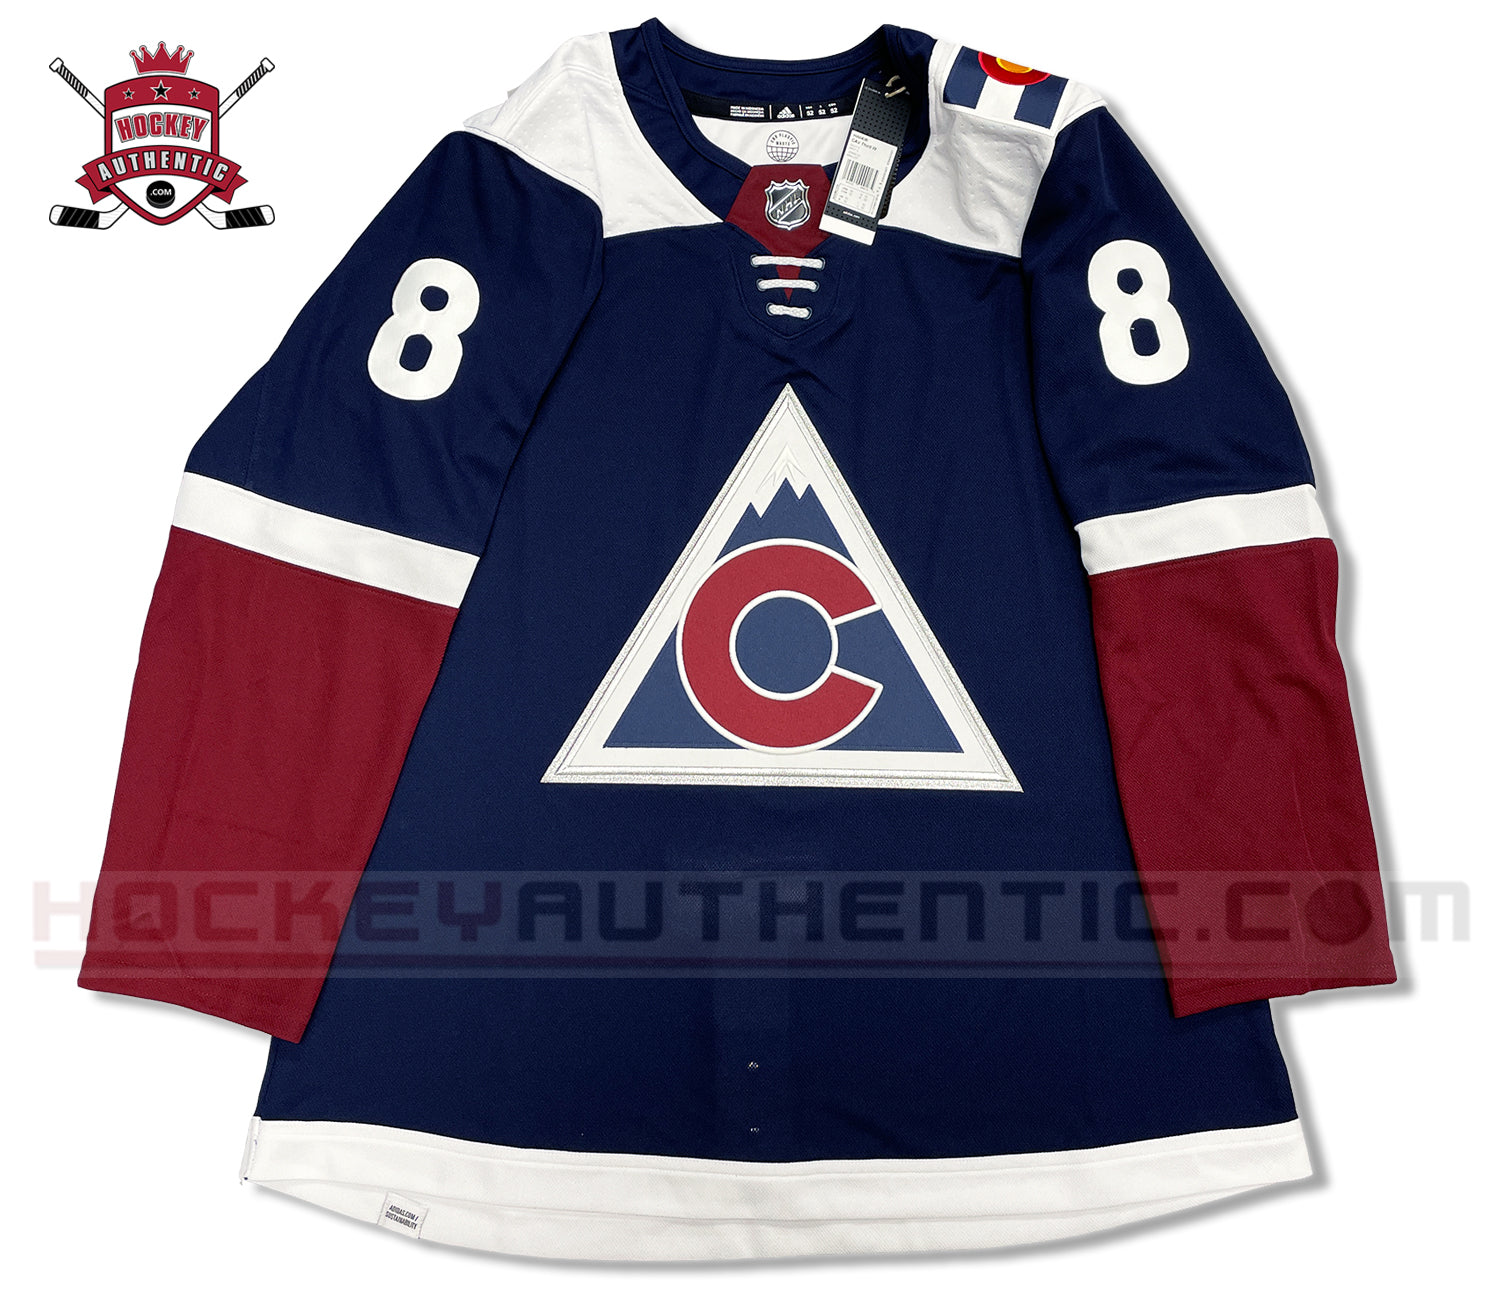 Colorado Avalanche Adidas Authentic Third Alternate NHL Hockey Jersey